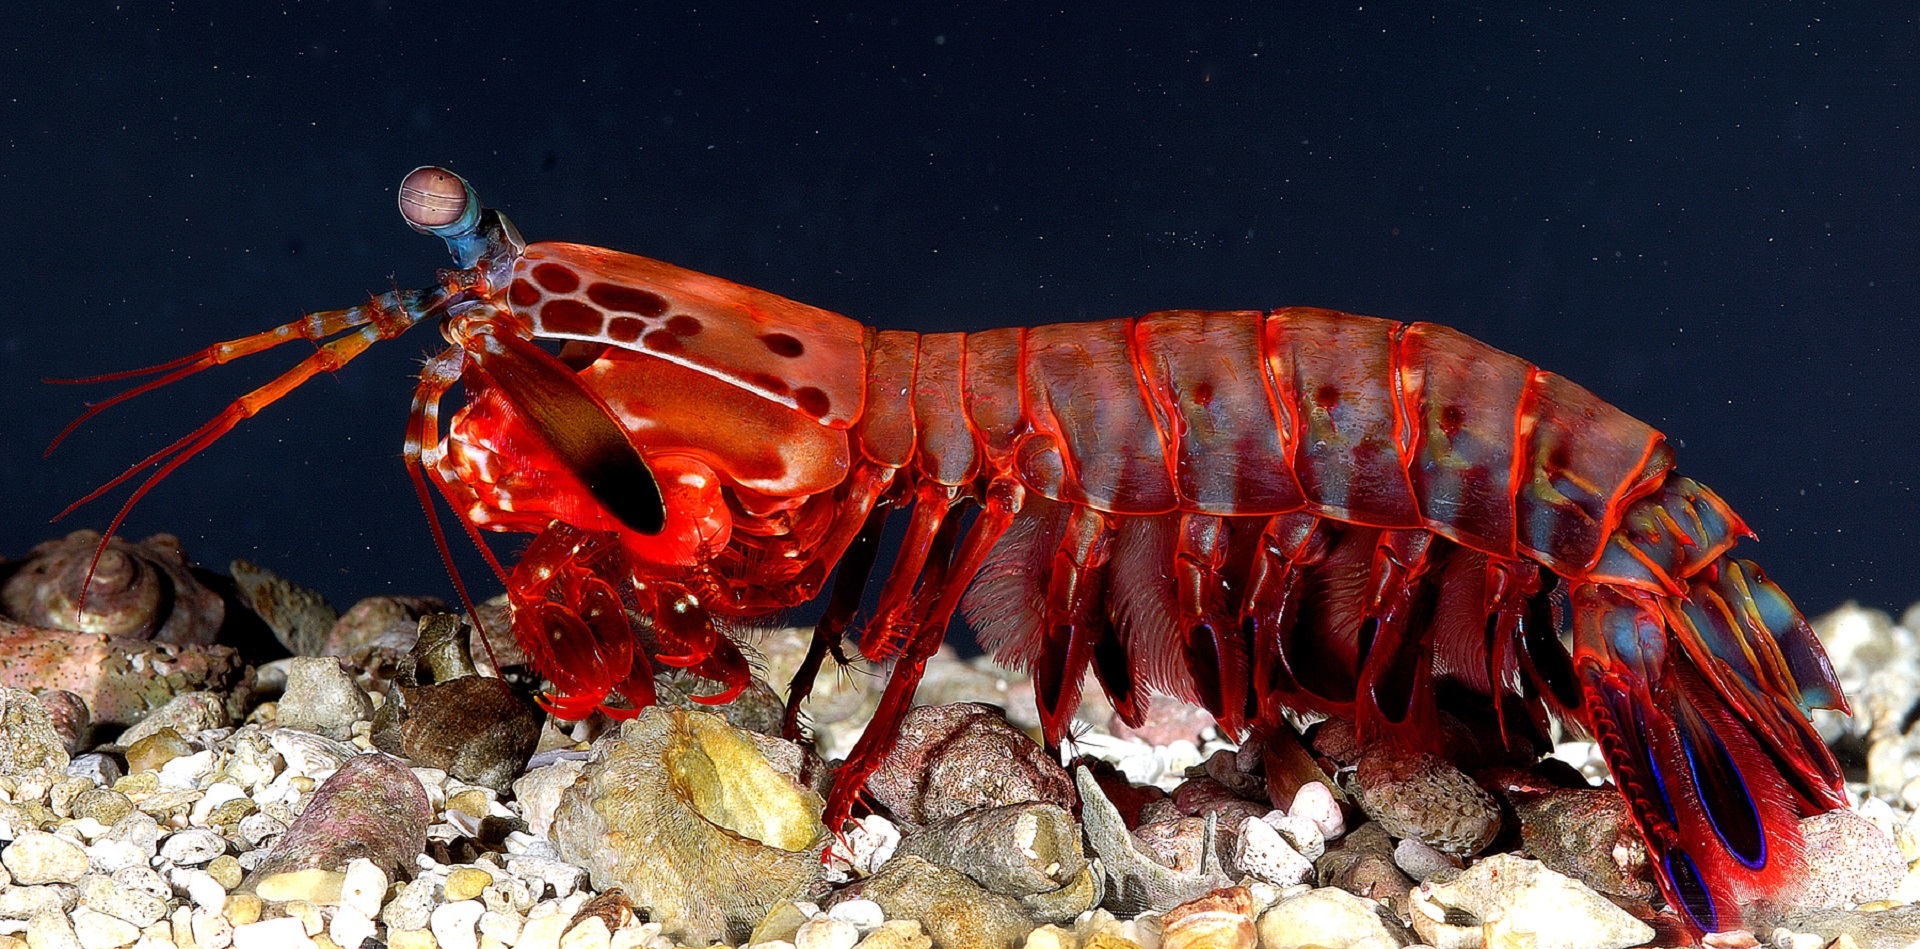 Mantis shrimp photo